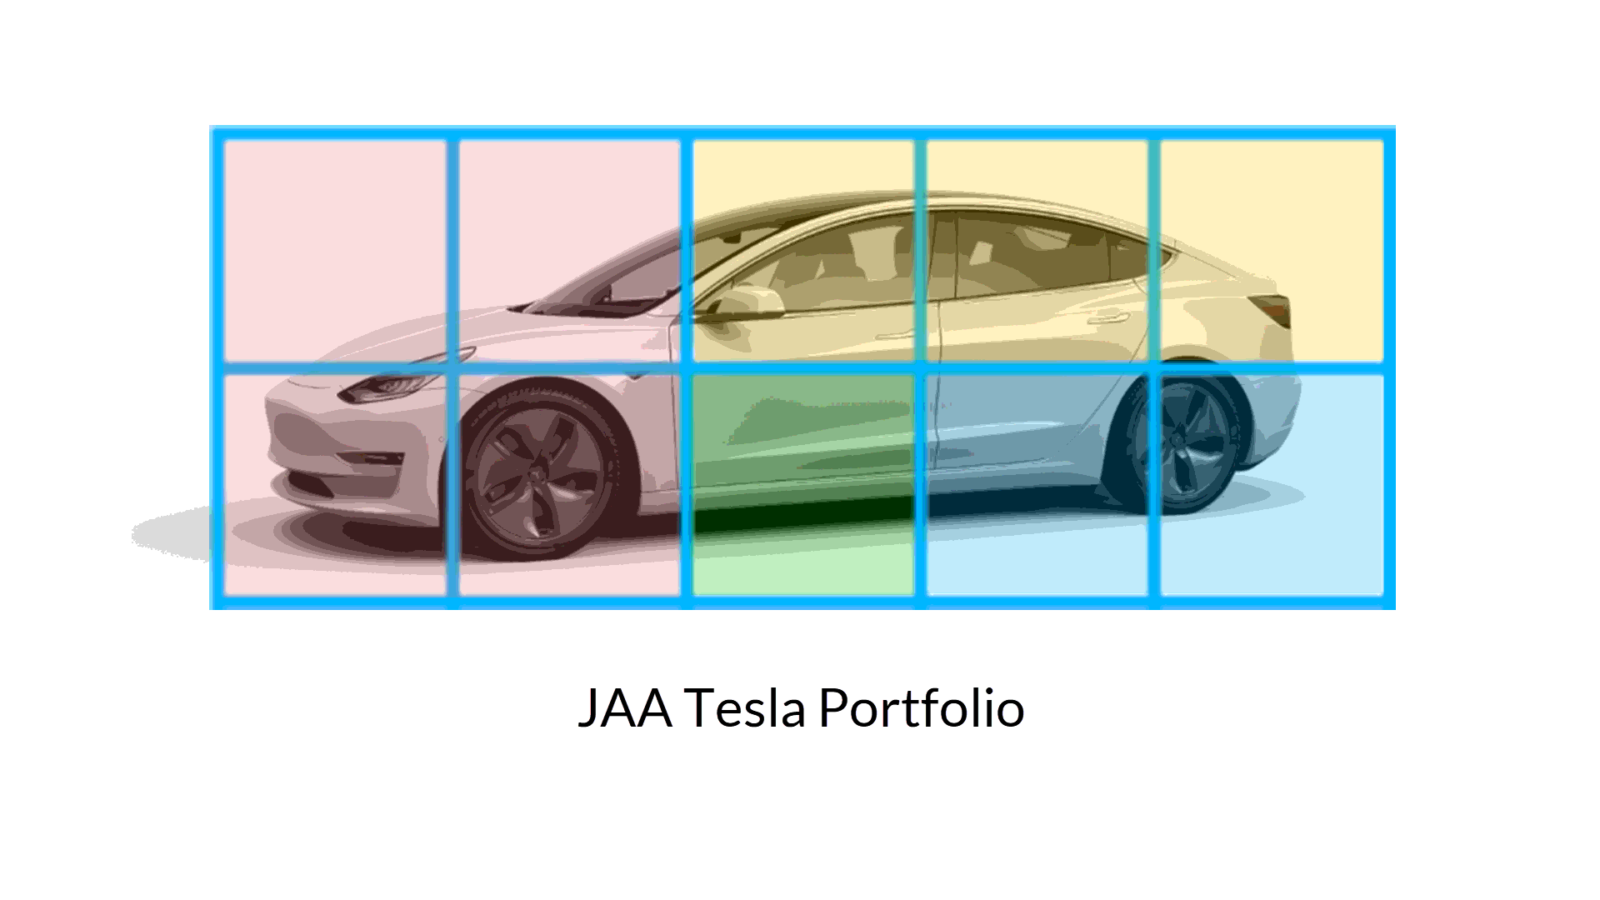 JAA Tesla shared-ownership vehicles